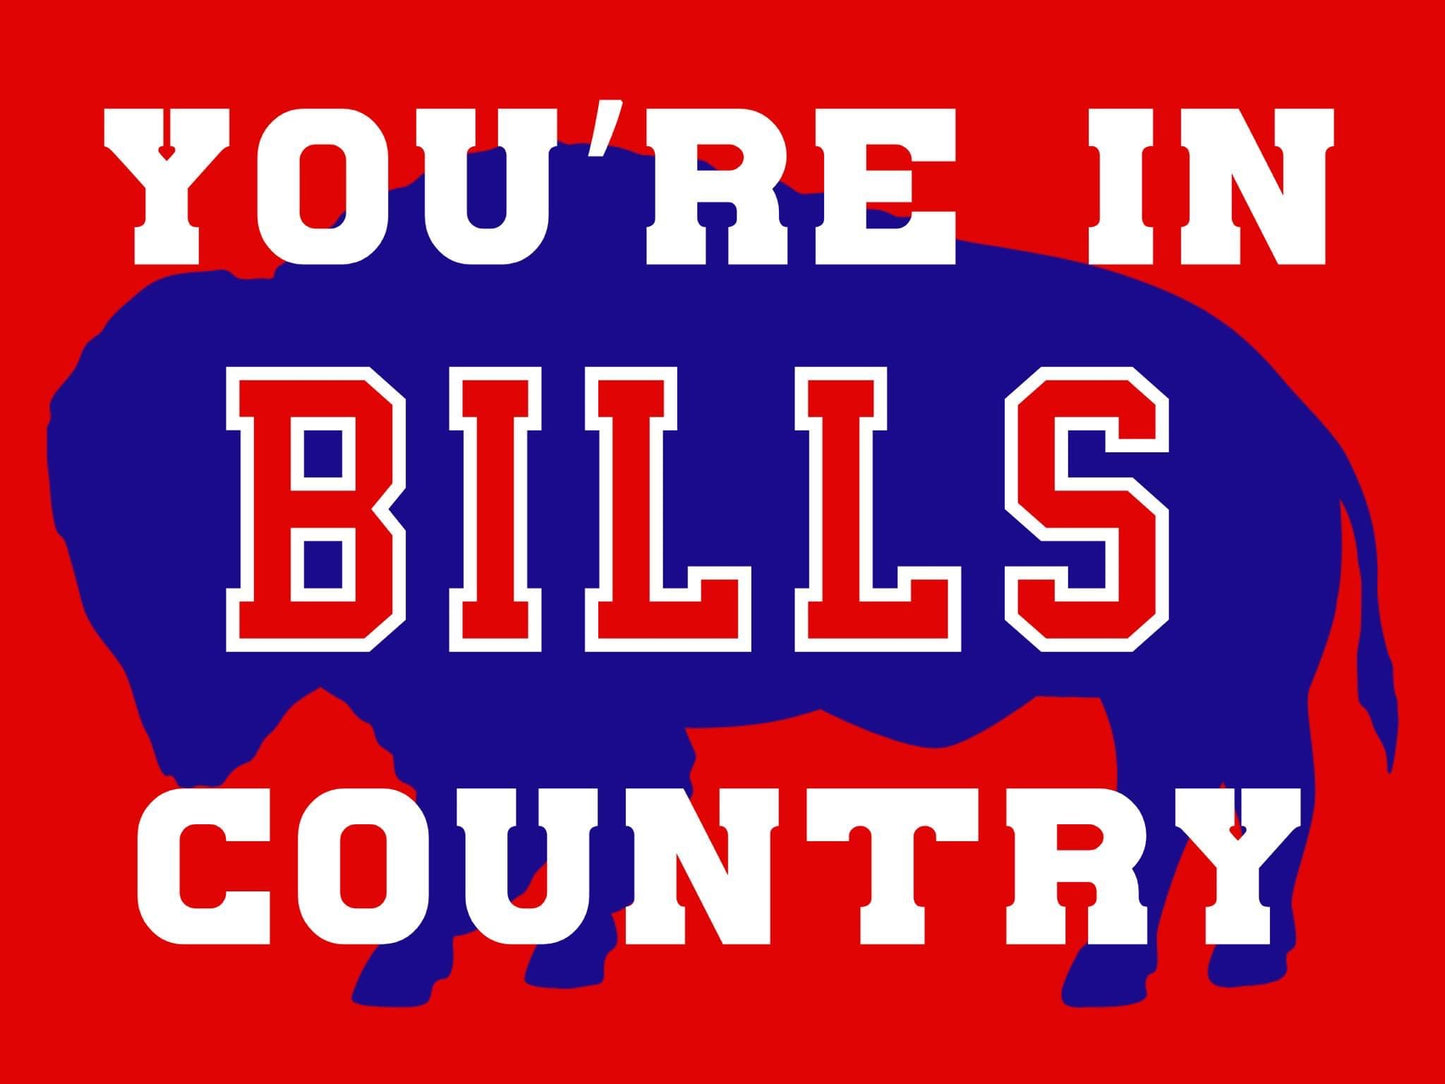 Bills Country Yard Sign